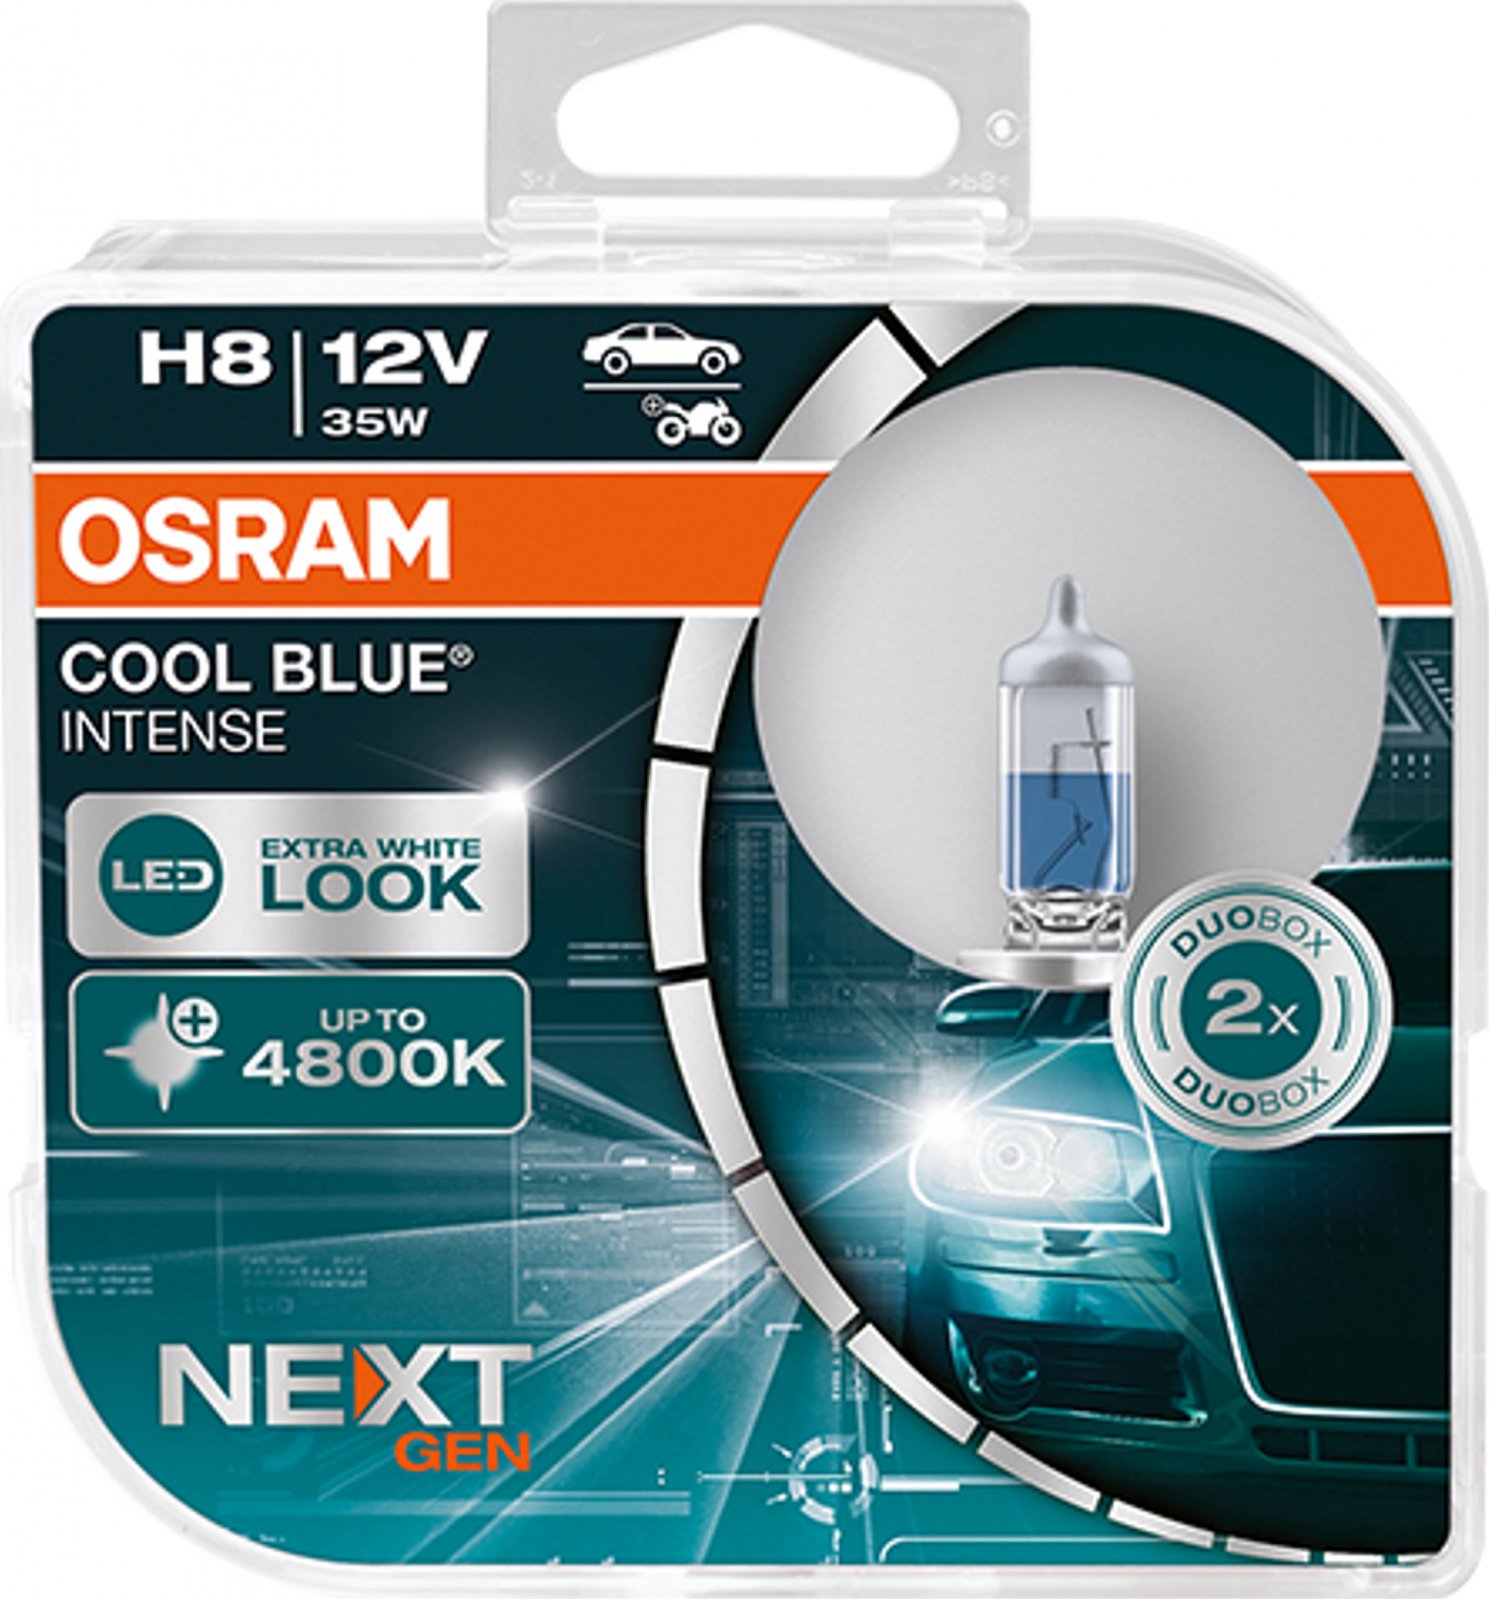 OSRAM H8 Cool Blue Intense Next Generation 12V 35W od 725 Kč 